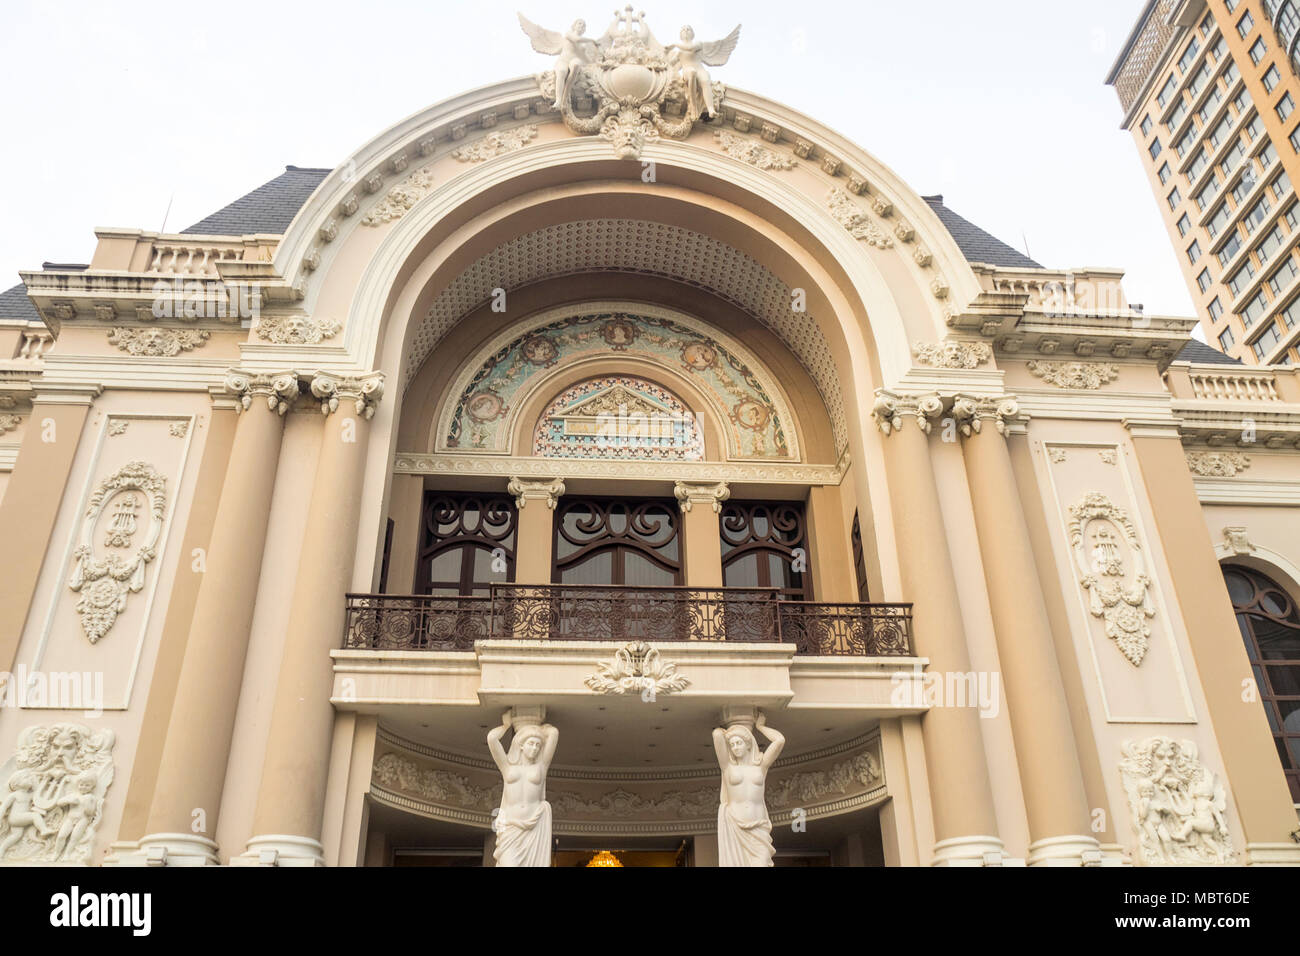 Das Beaux Arts Fassade des Stadttheater von Ho Chi Minh City oder Saigon Oper, Vietnam. Stockfoto